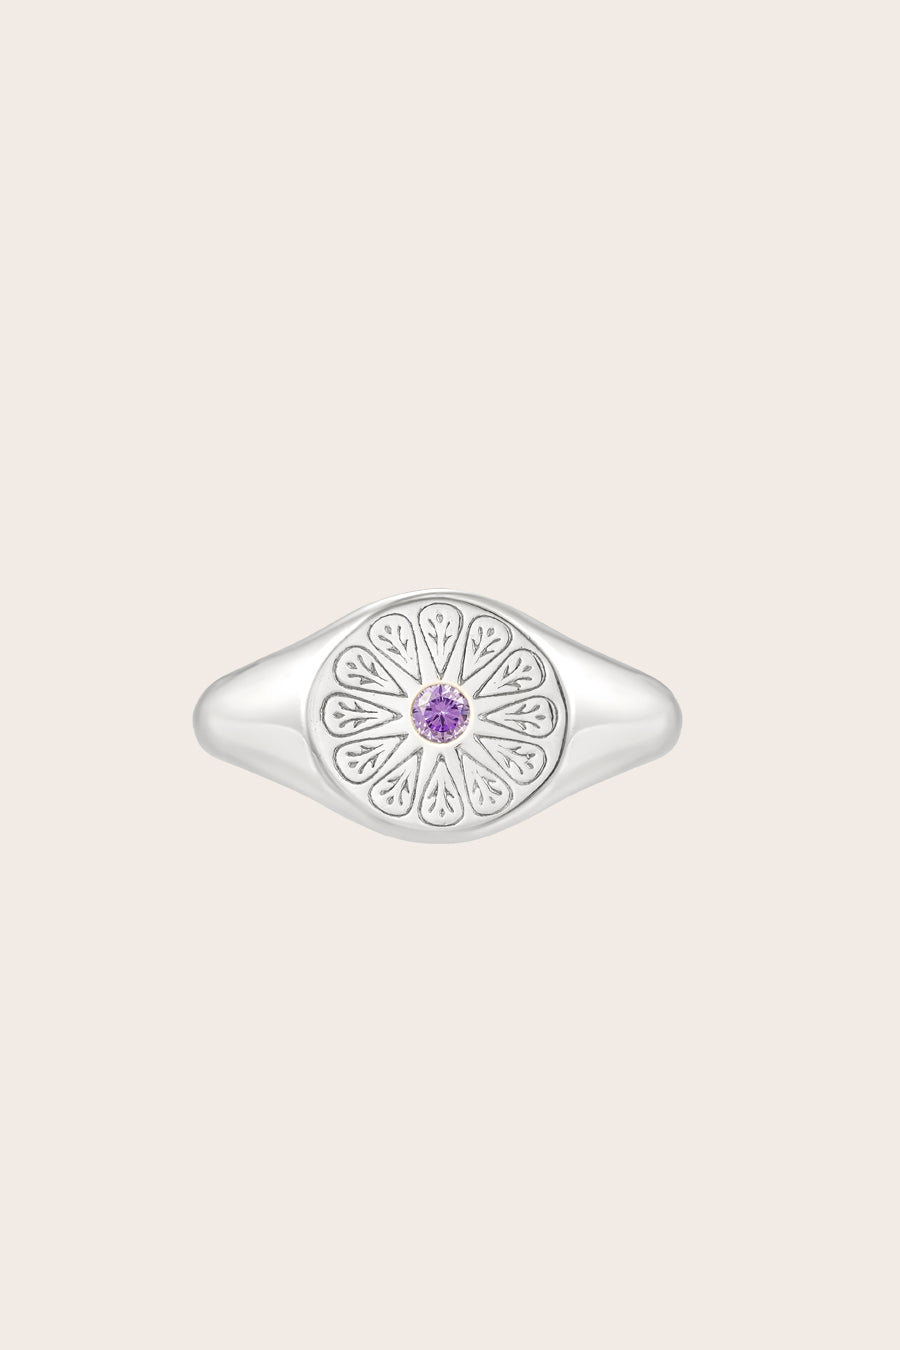 Silver Amethyst Birthstone Signet Ring on cream background